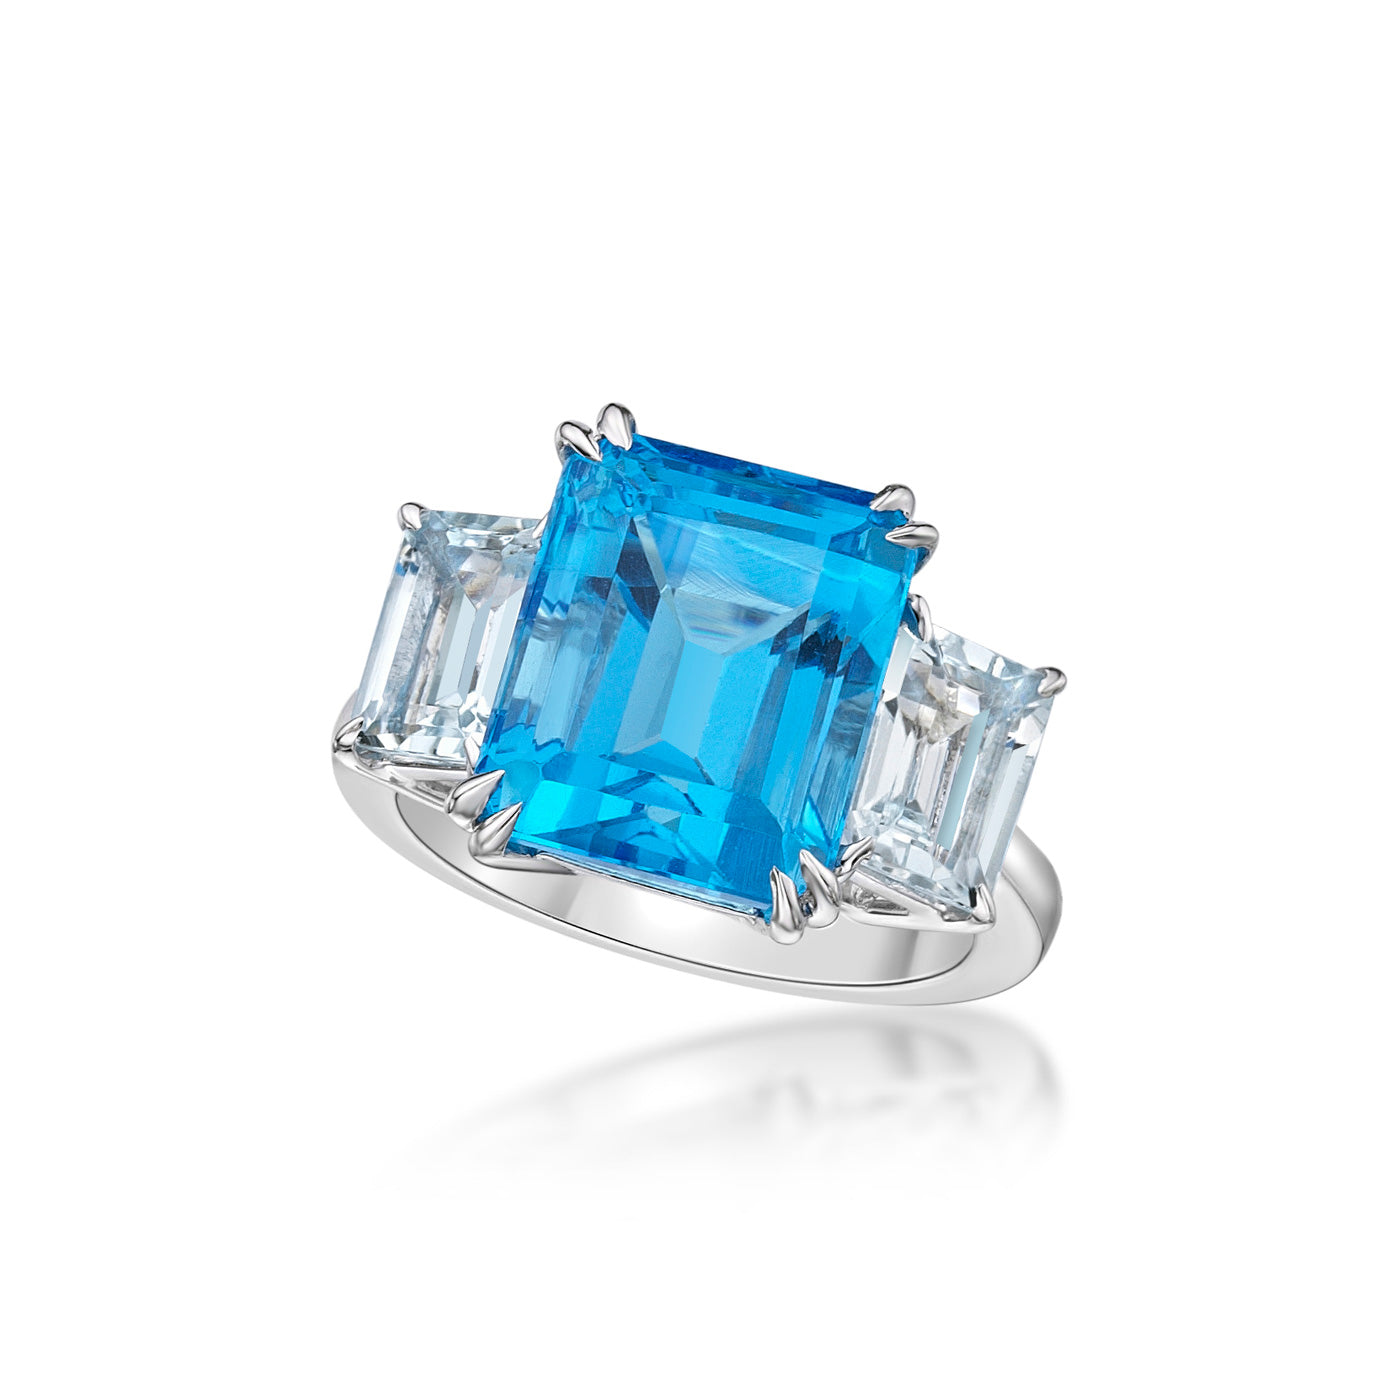 9.50ct Emerald cut Blue Topaz Cocktail Ring with Aquamarine Sidestones